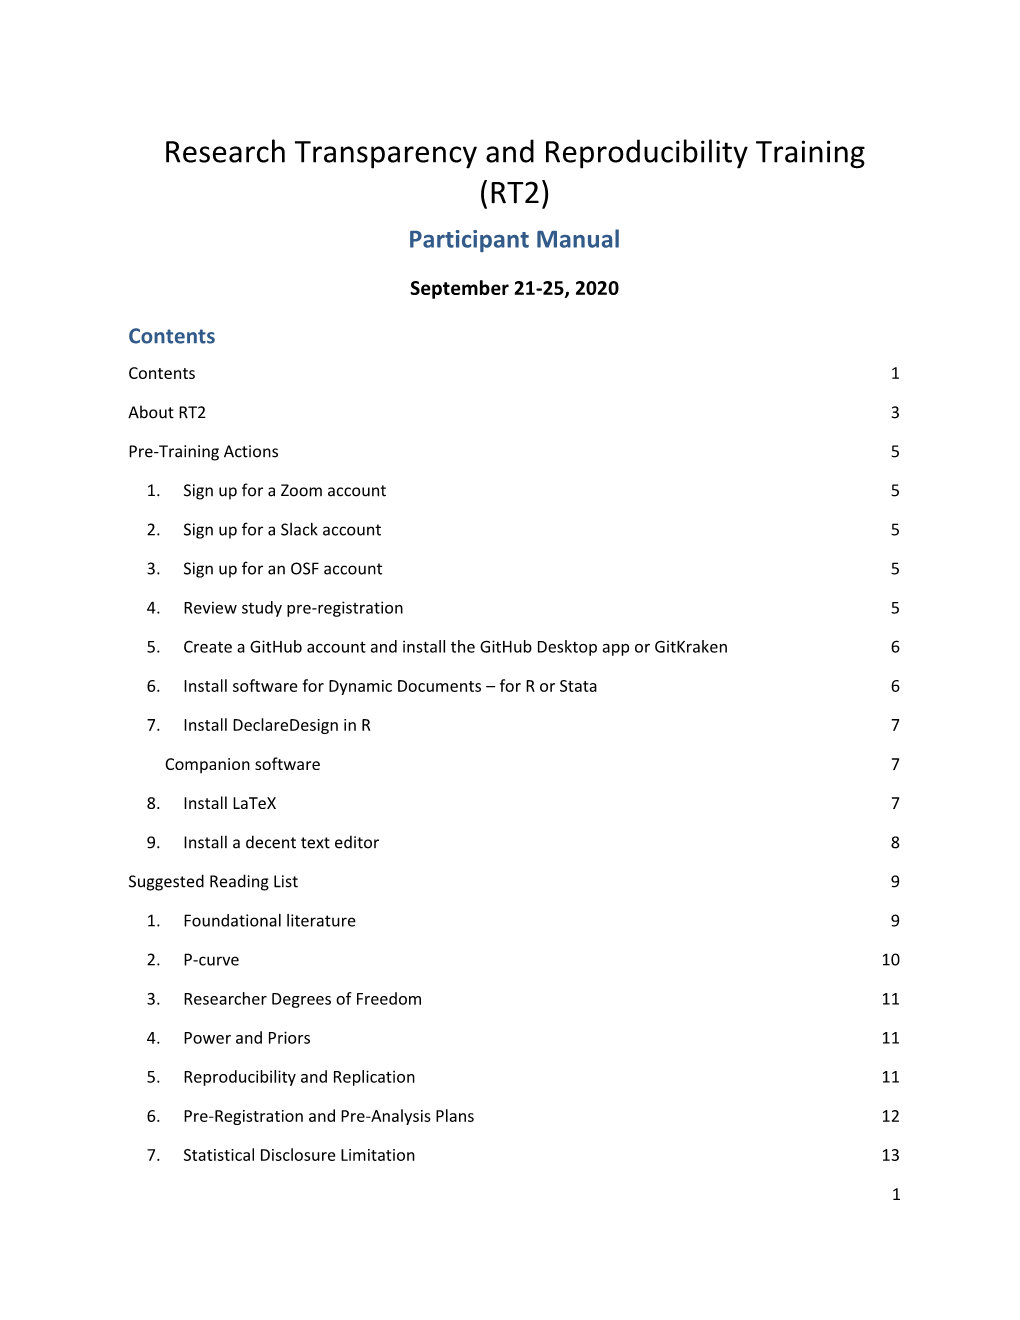 RT2) Participant Manual